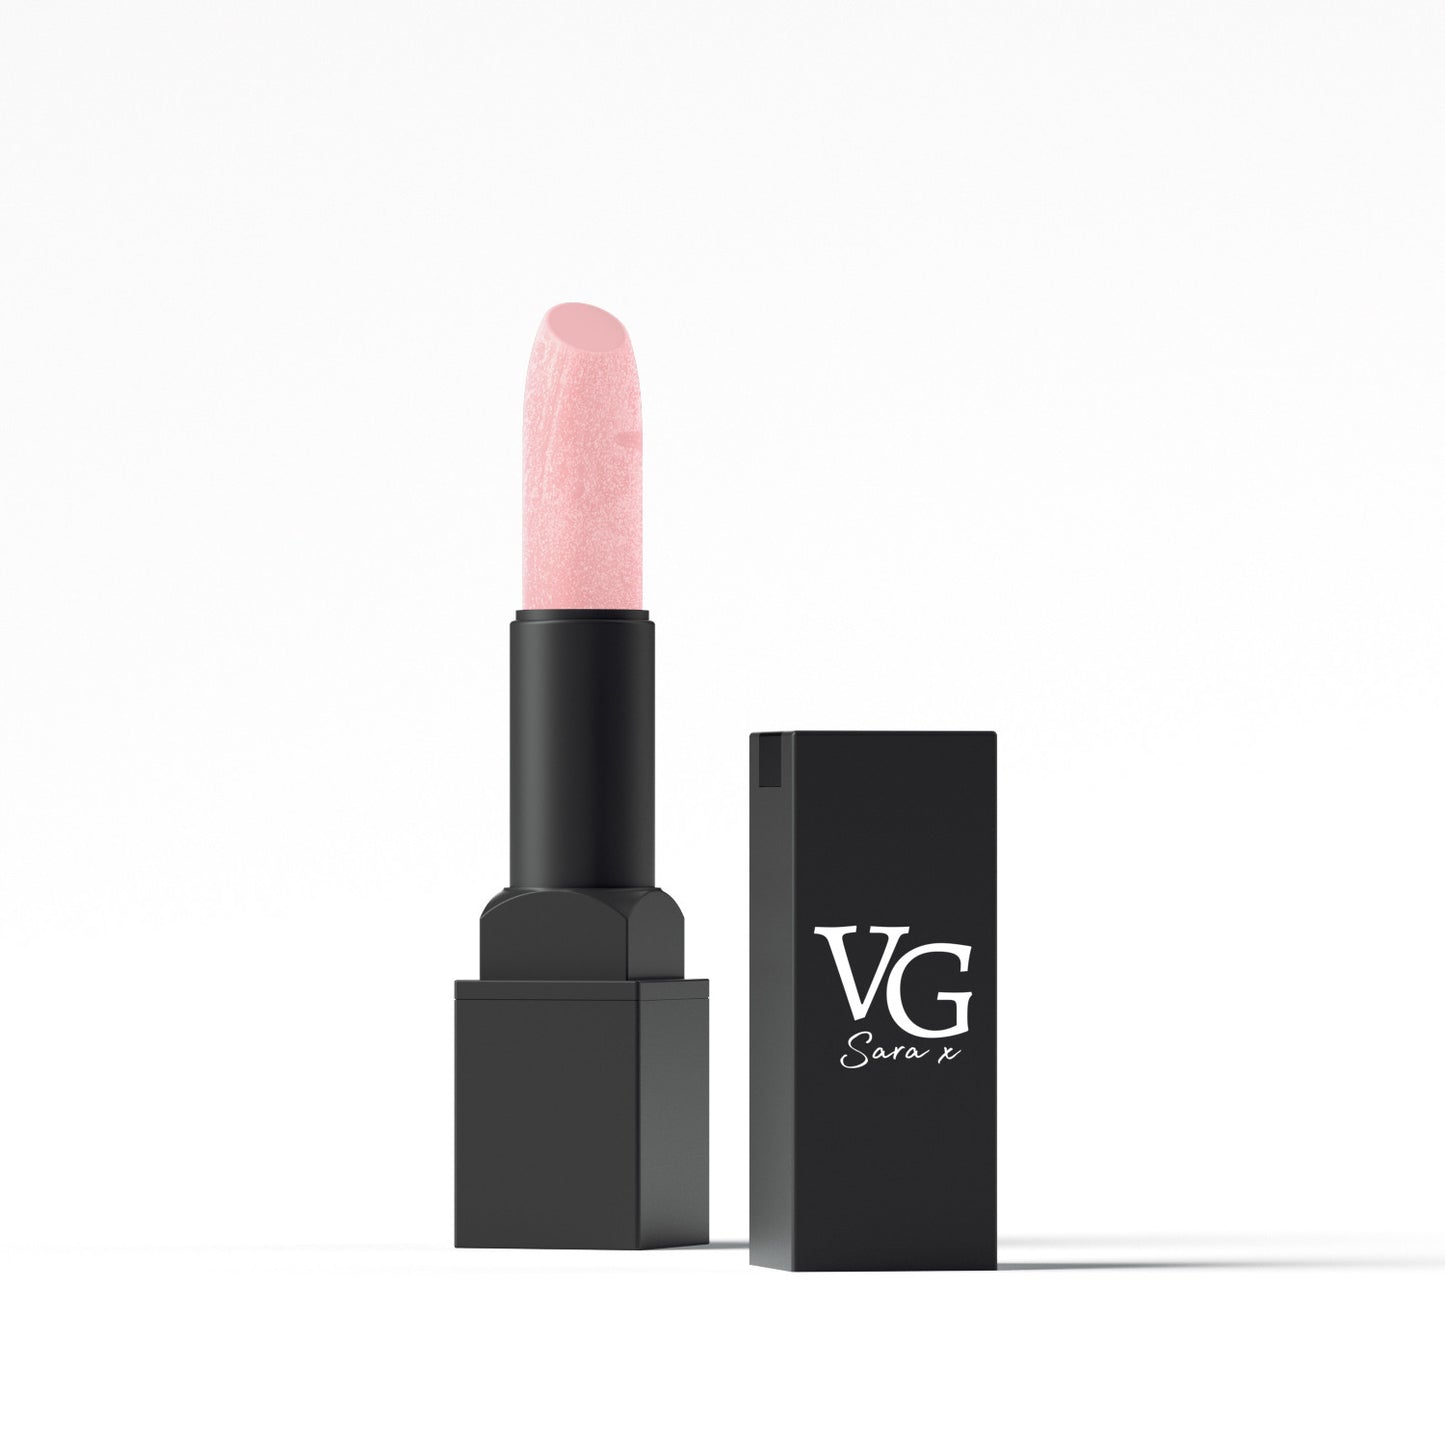 VG Cosmetics lipstick on its elegant black packaging